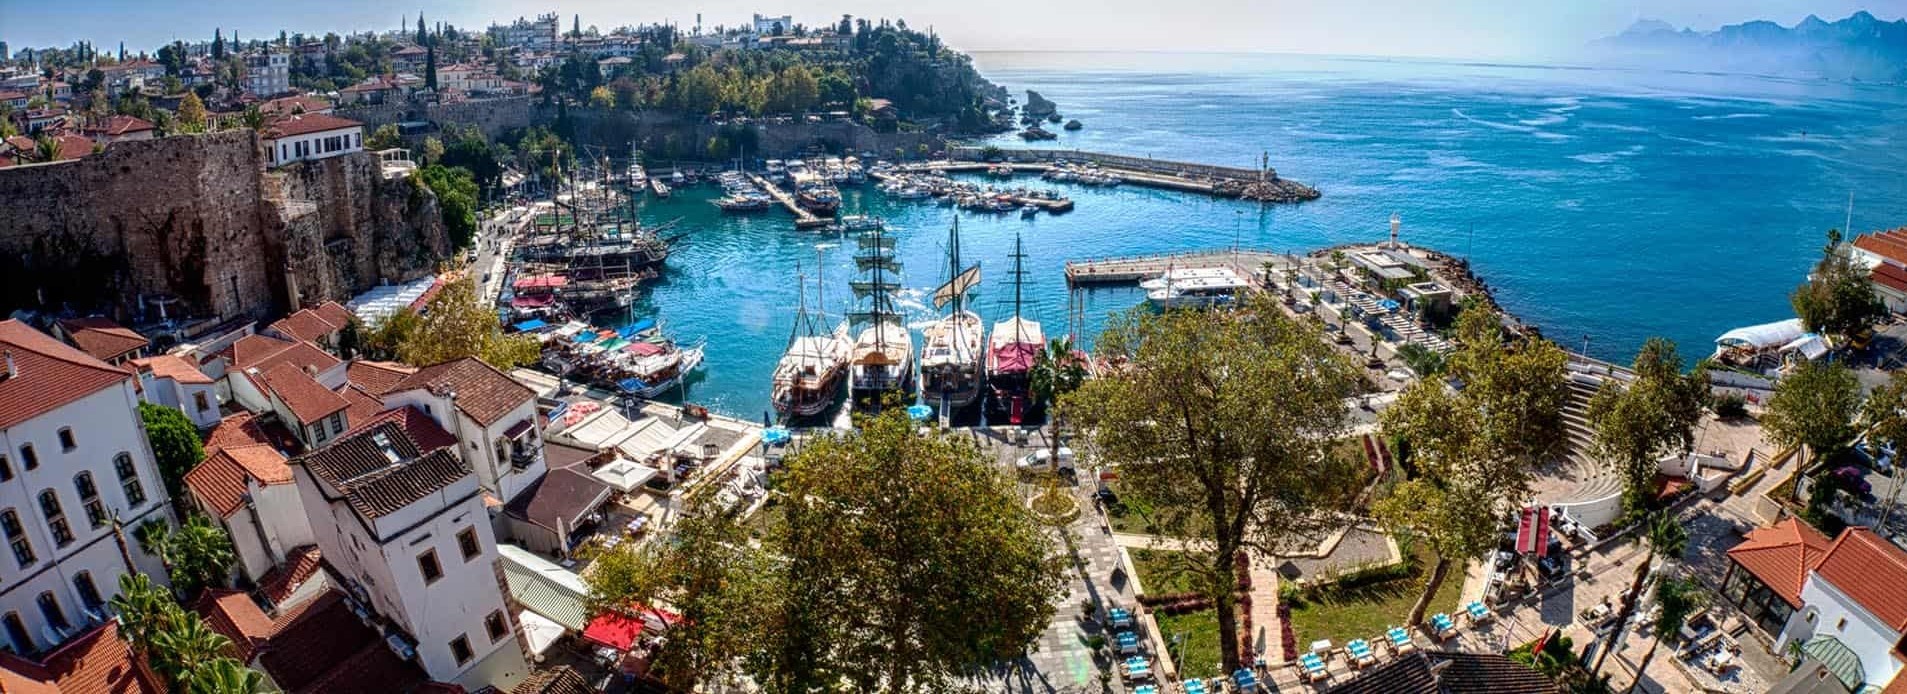 Travel Guide Antalya